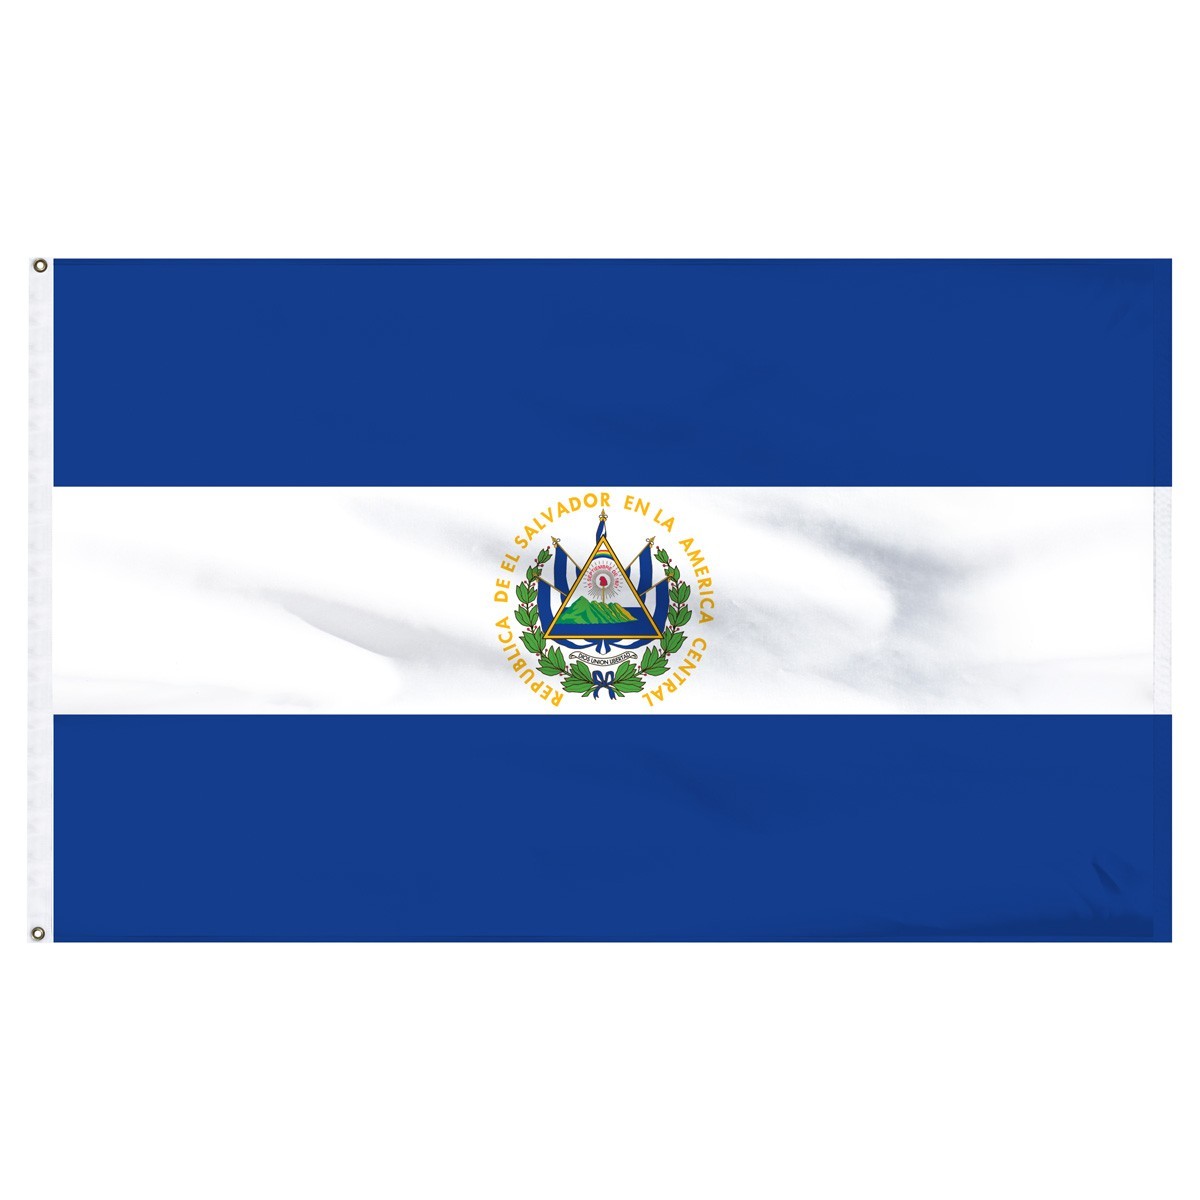 El Salvador flags for sale